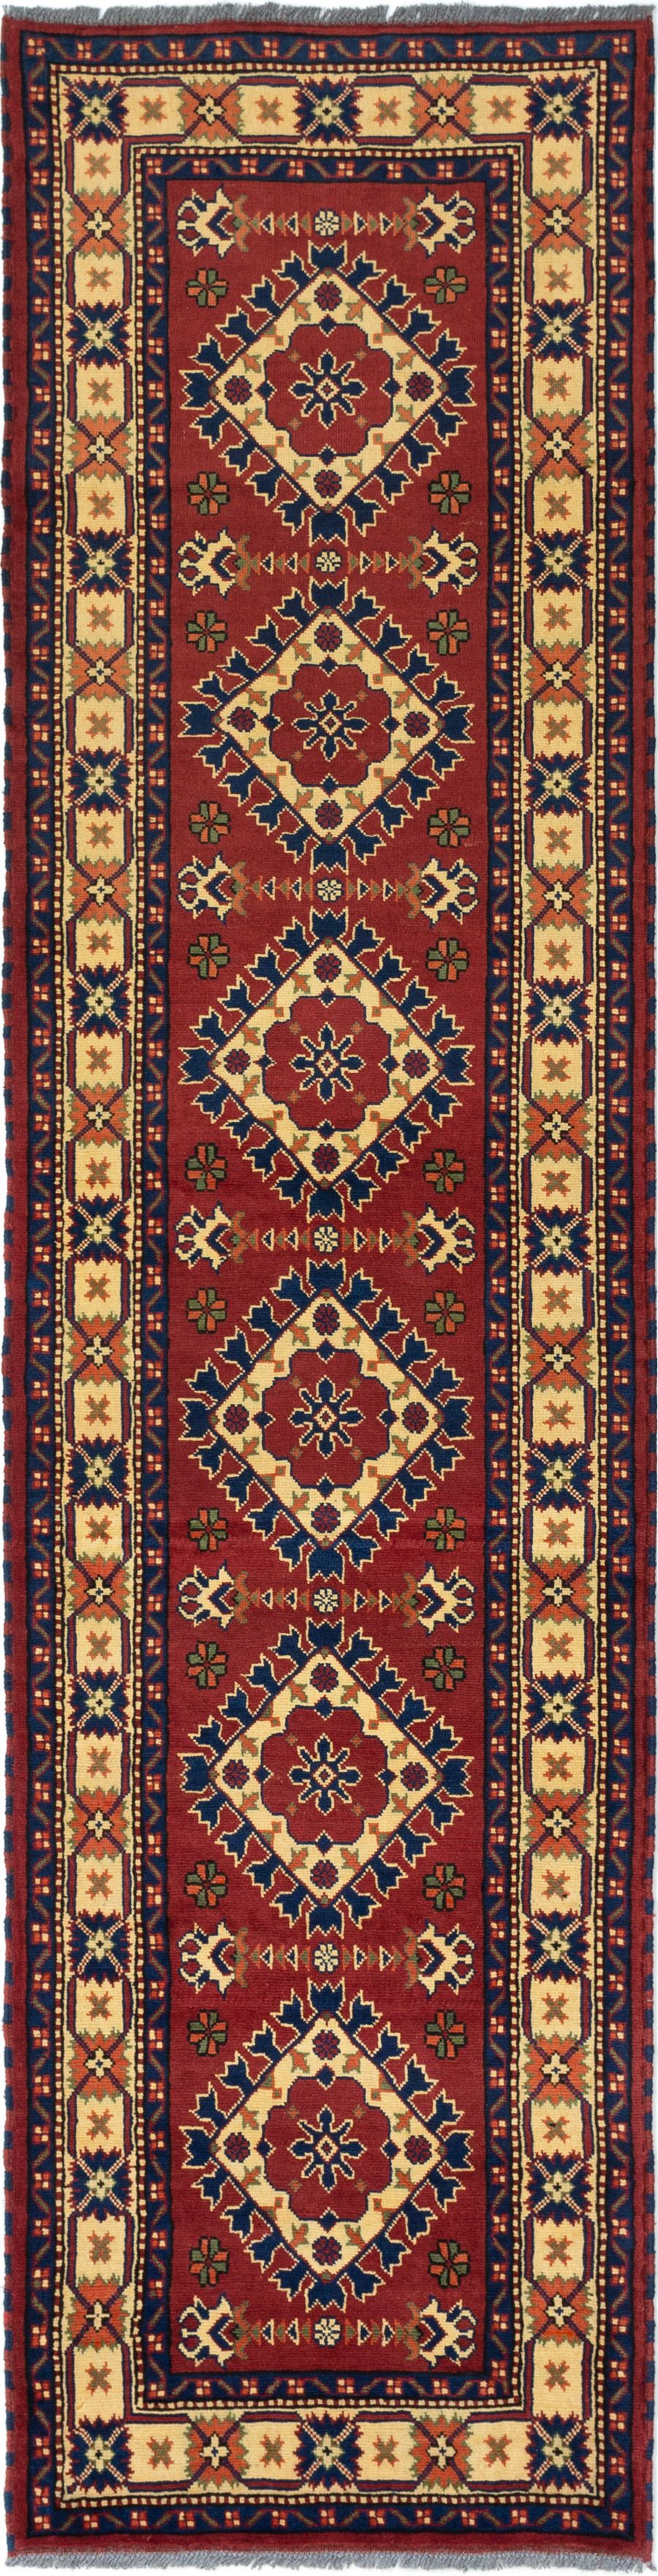 Hand-knotted Finest Kargahi Dark Red Wool Rug 2'8" x 10'11" Size: 2'8" x 10'11"  